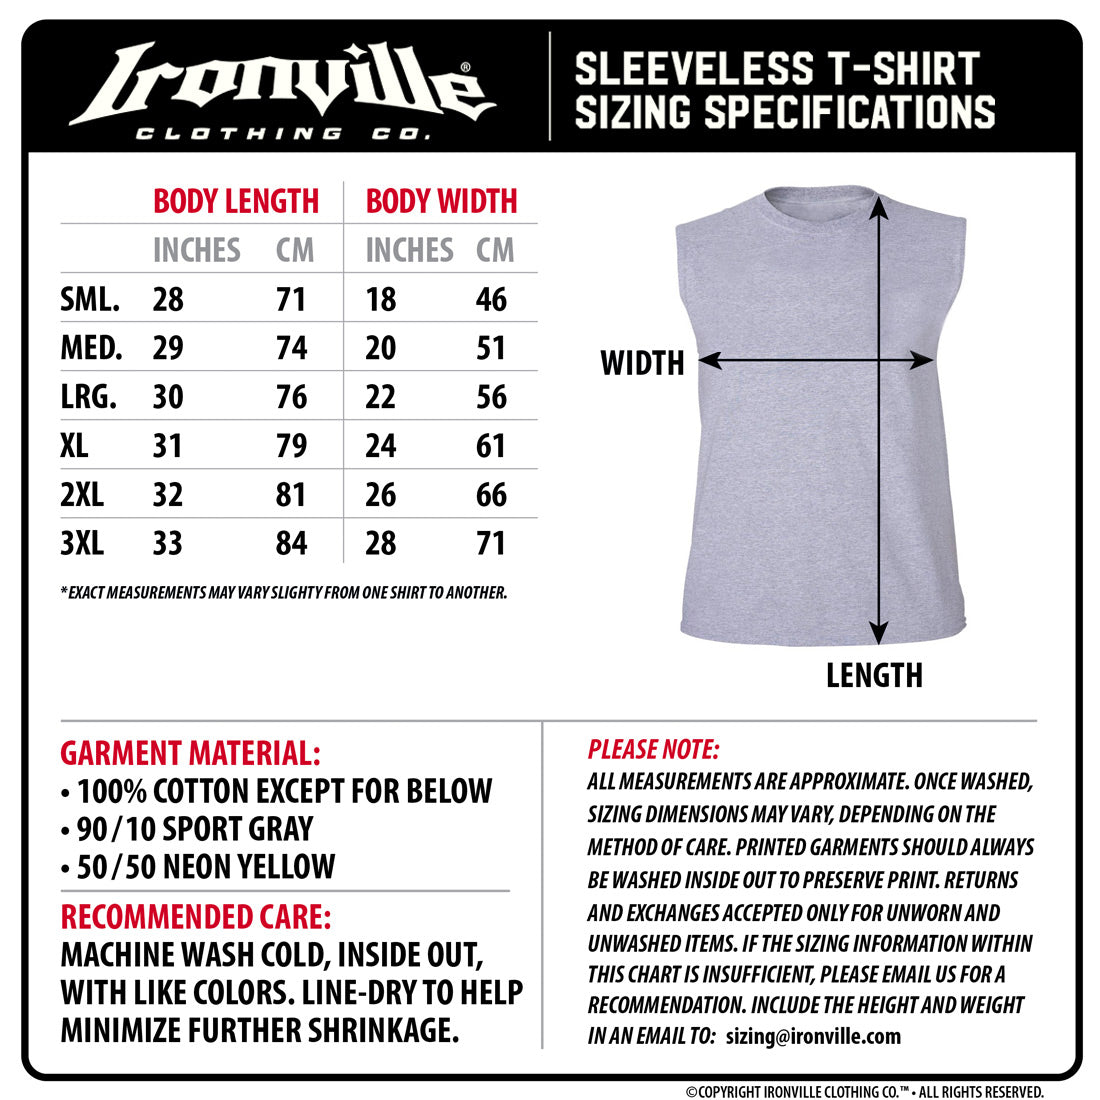 Ironville POWERLIFTING Sleeveless Muscle T-shirt